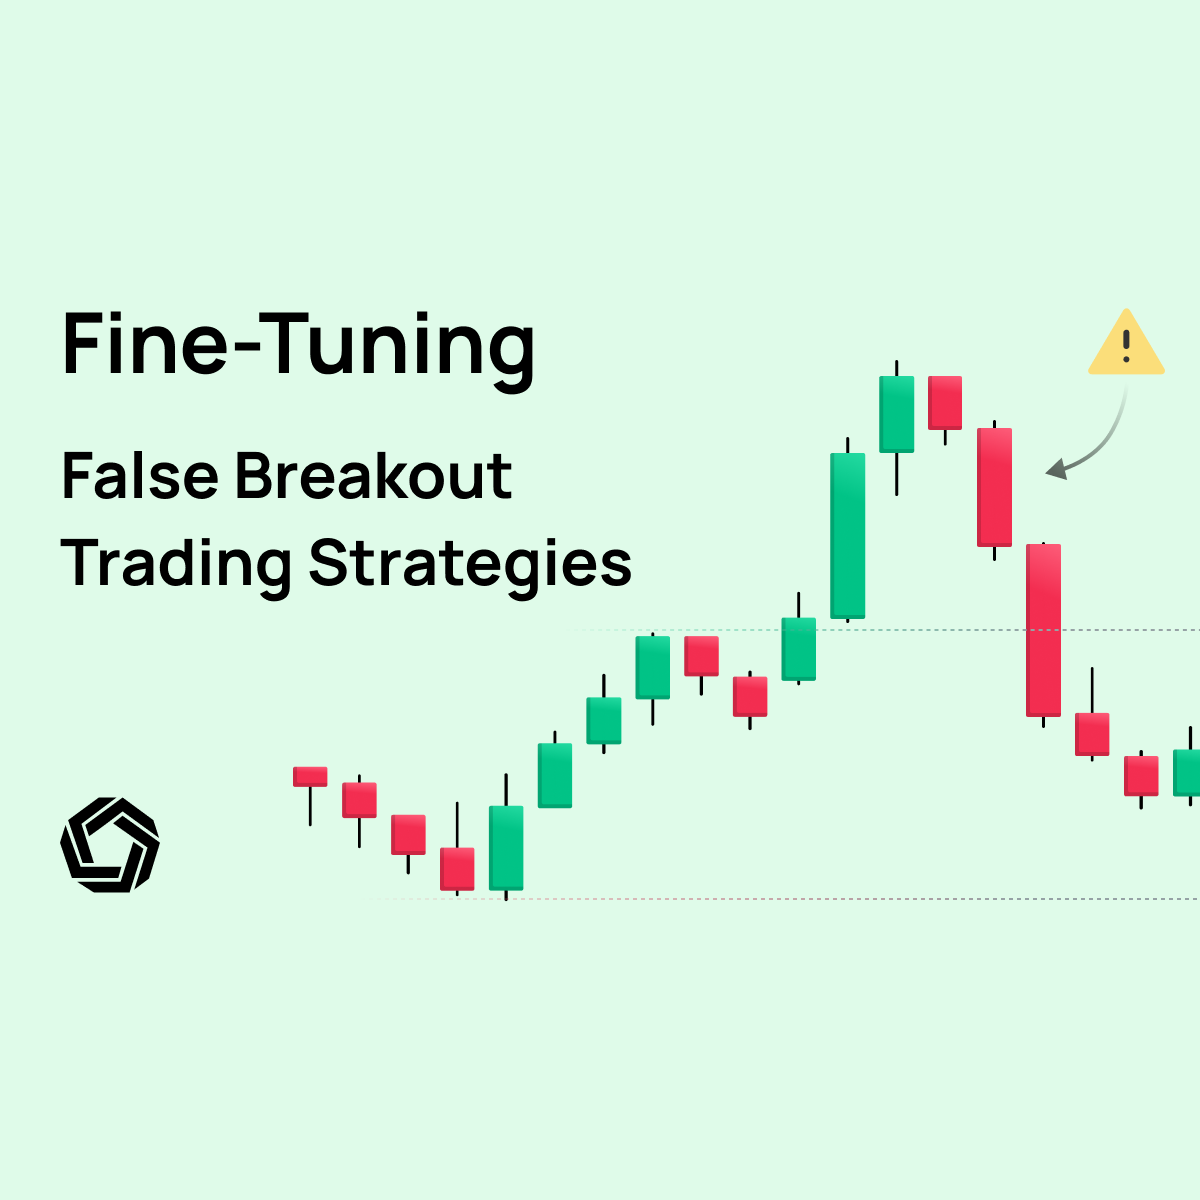 False Breakout Trading Strategies